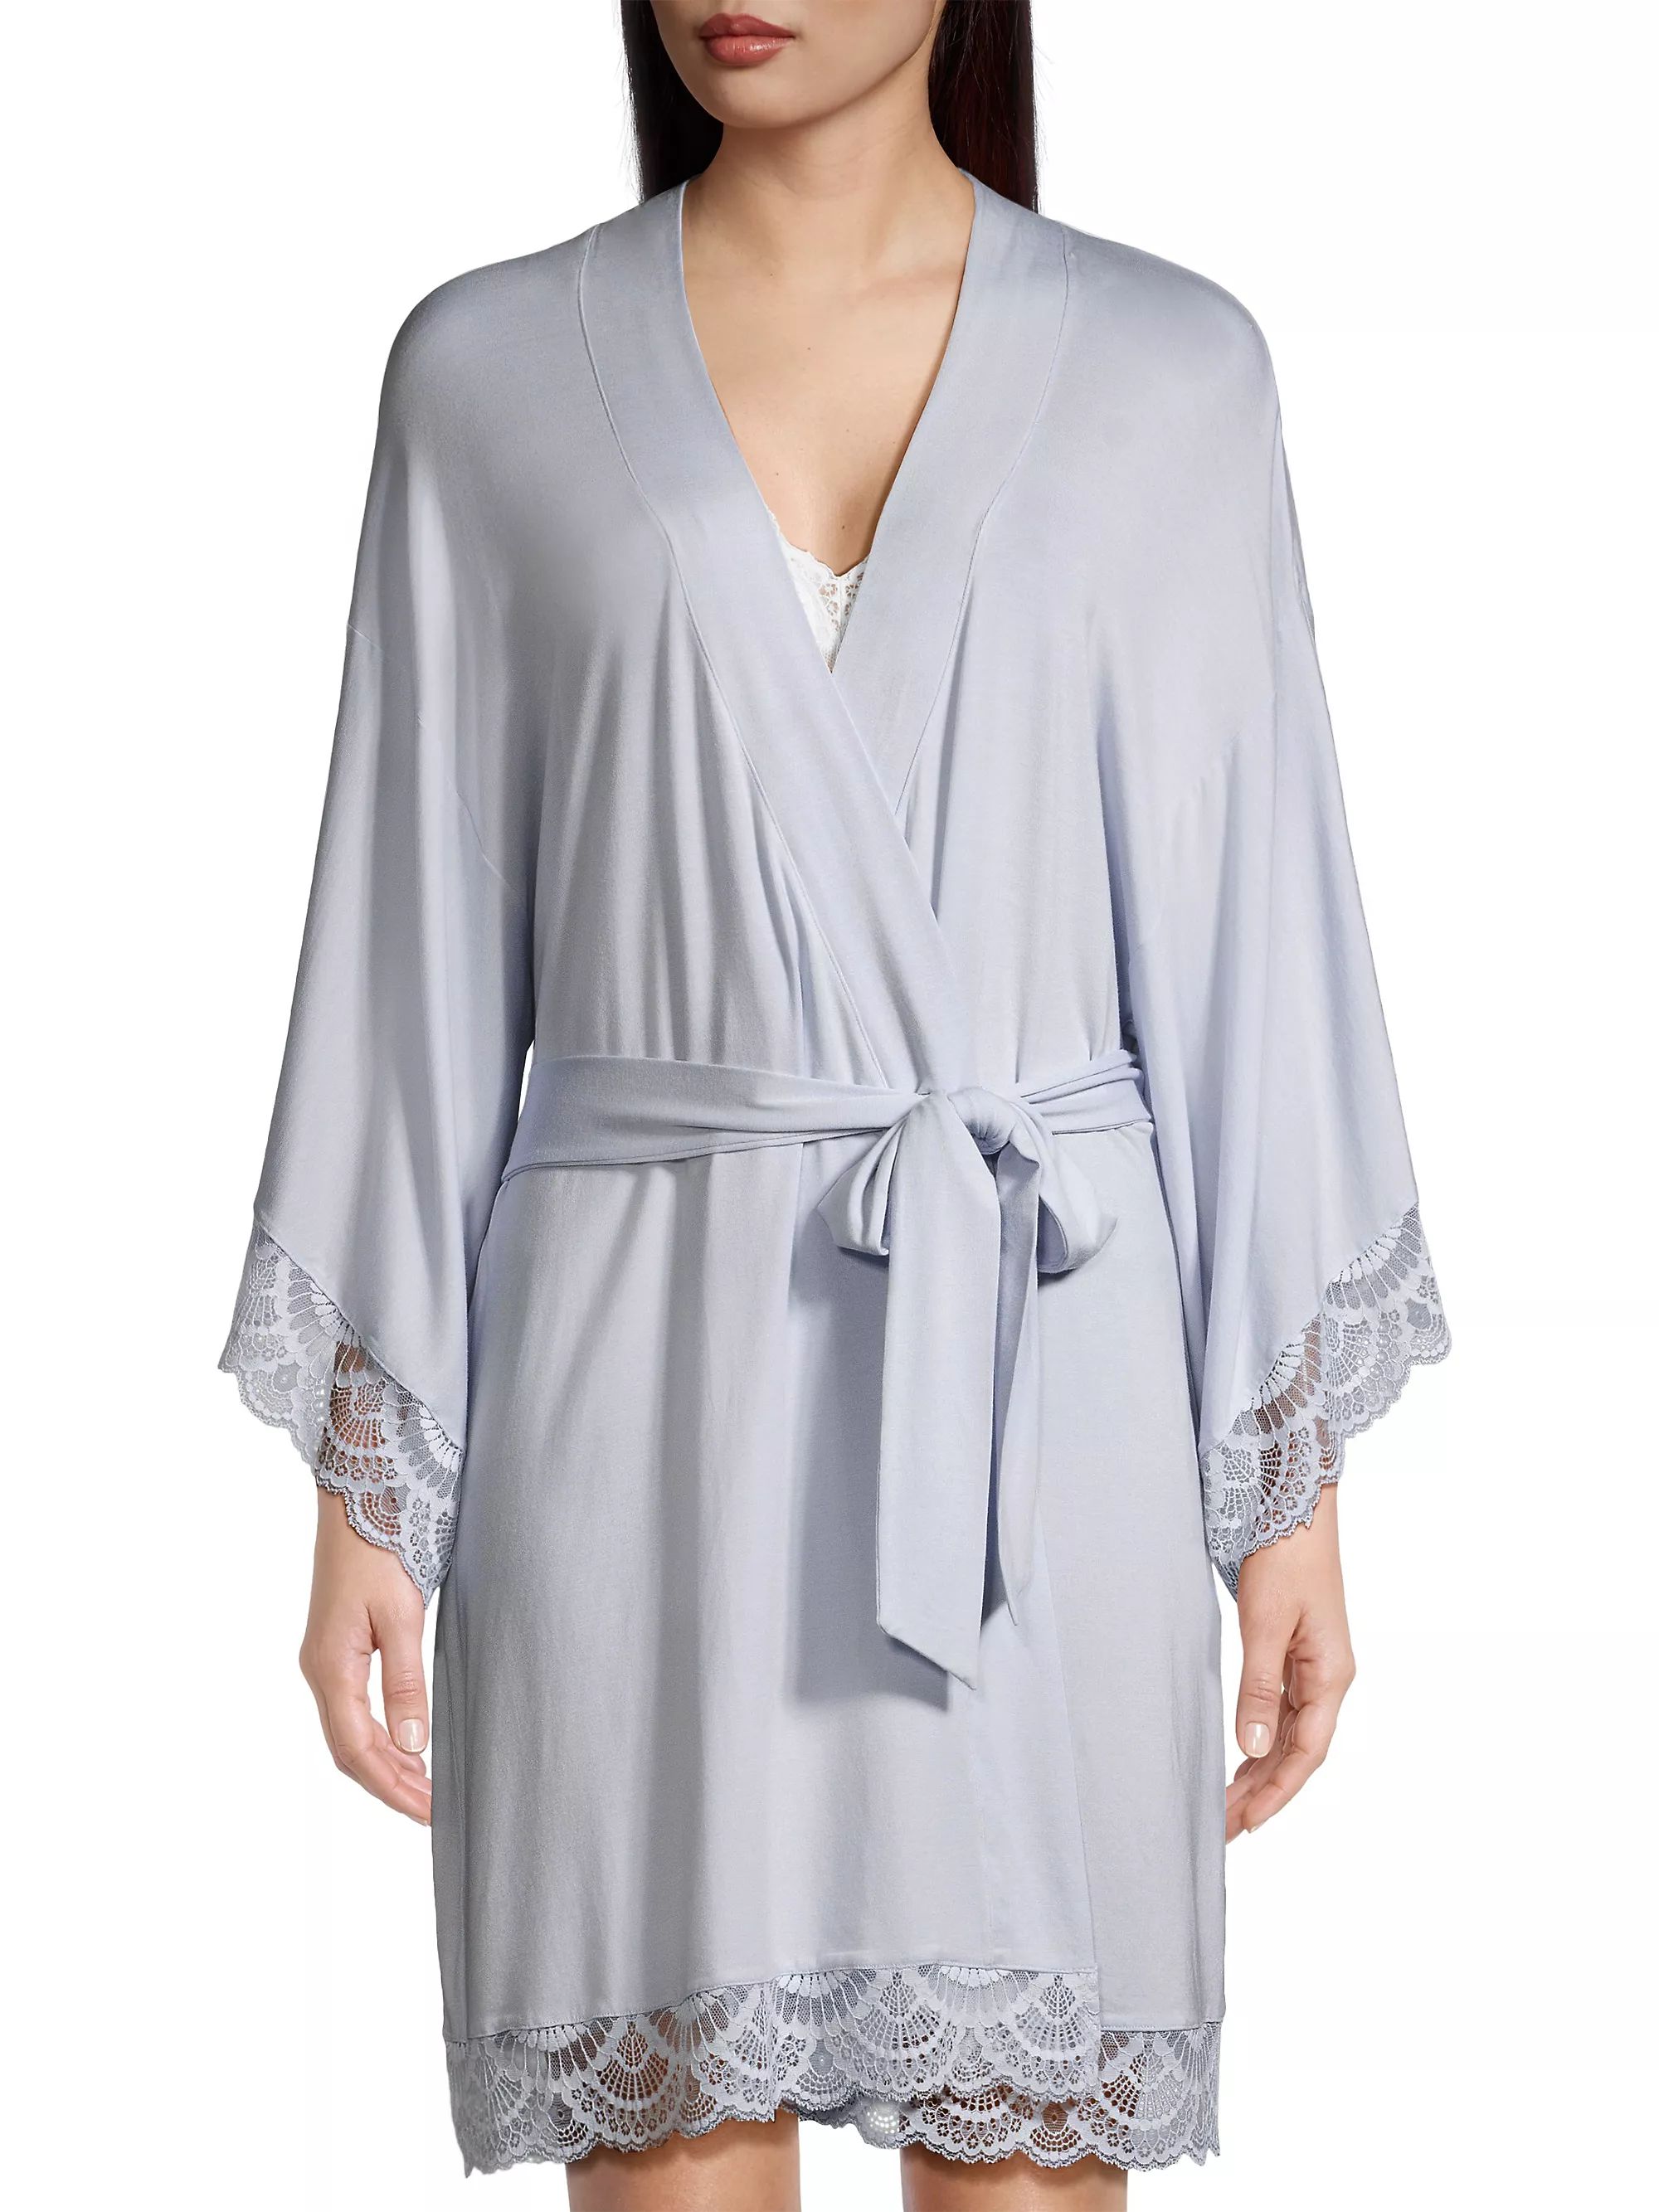 Pajamas & RobesRobesEberjeyMariana Modal Lace-Trim Robe$148 | Saks Fifth Avenue